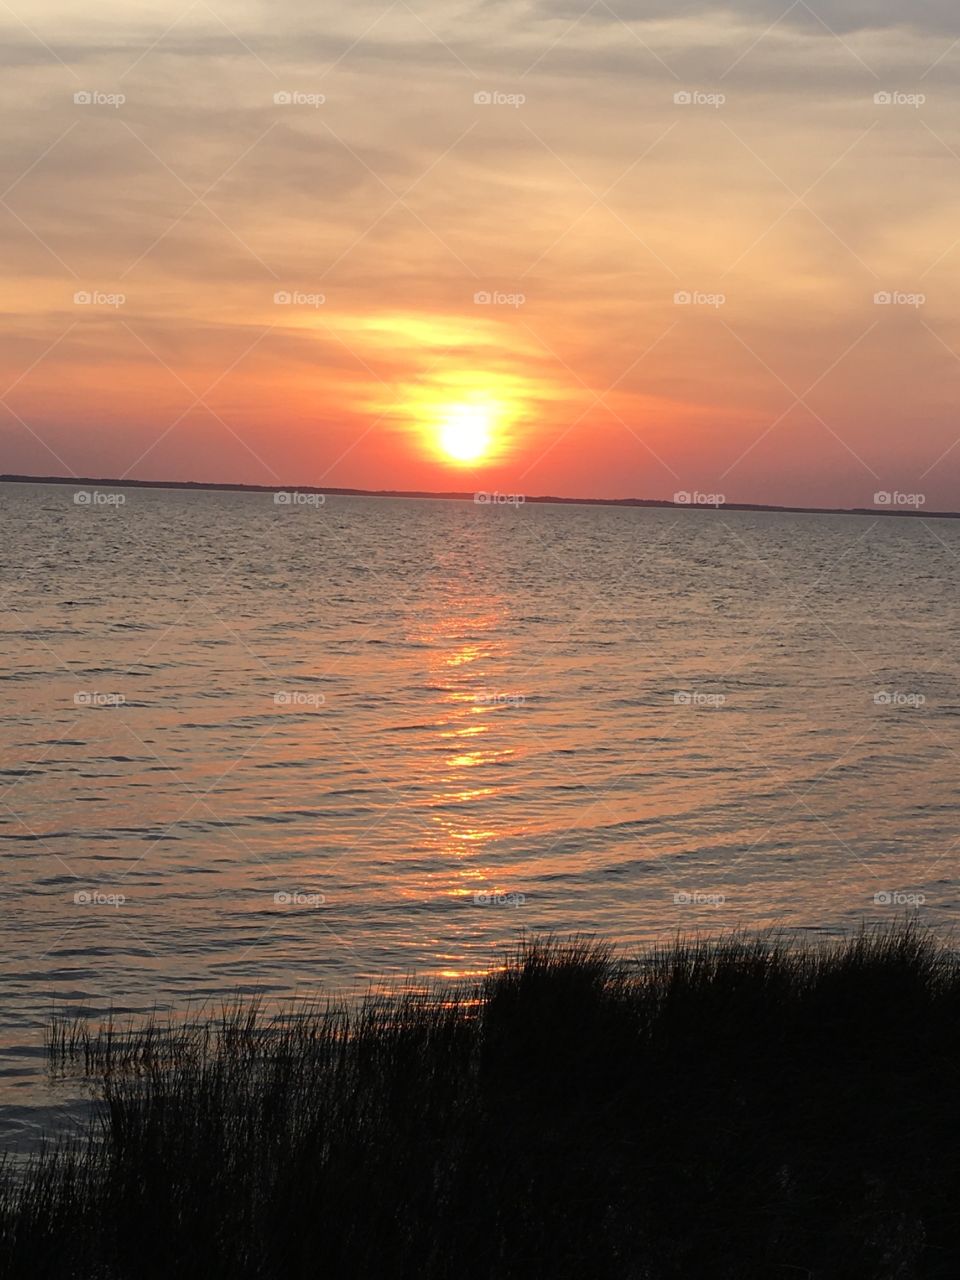 Boardwalk view of sunset Duck, NC